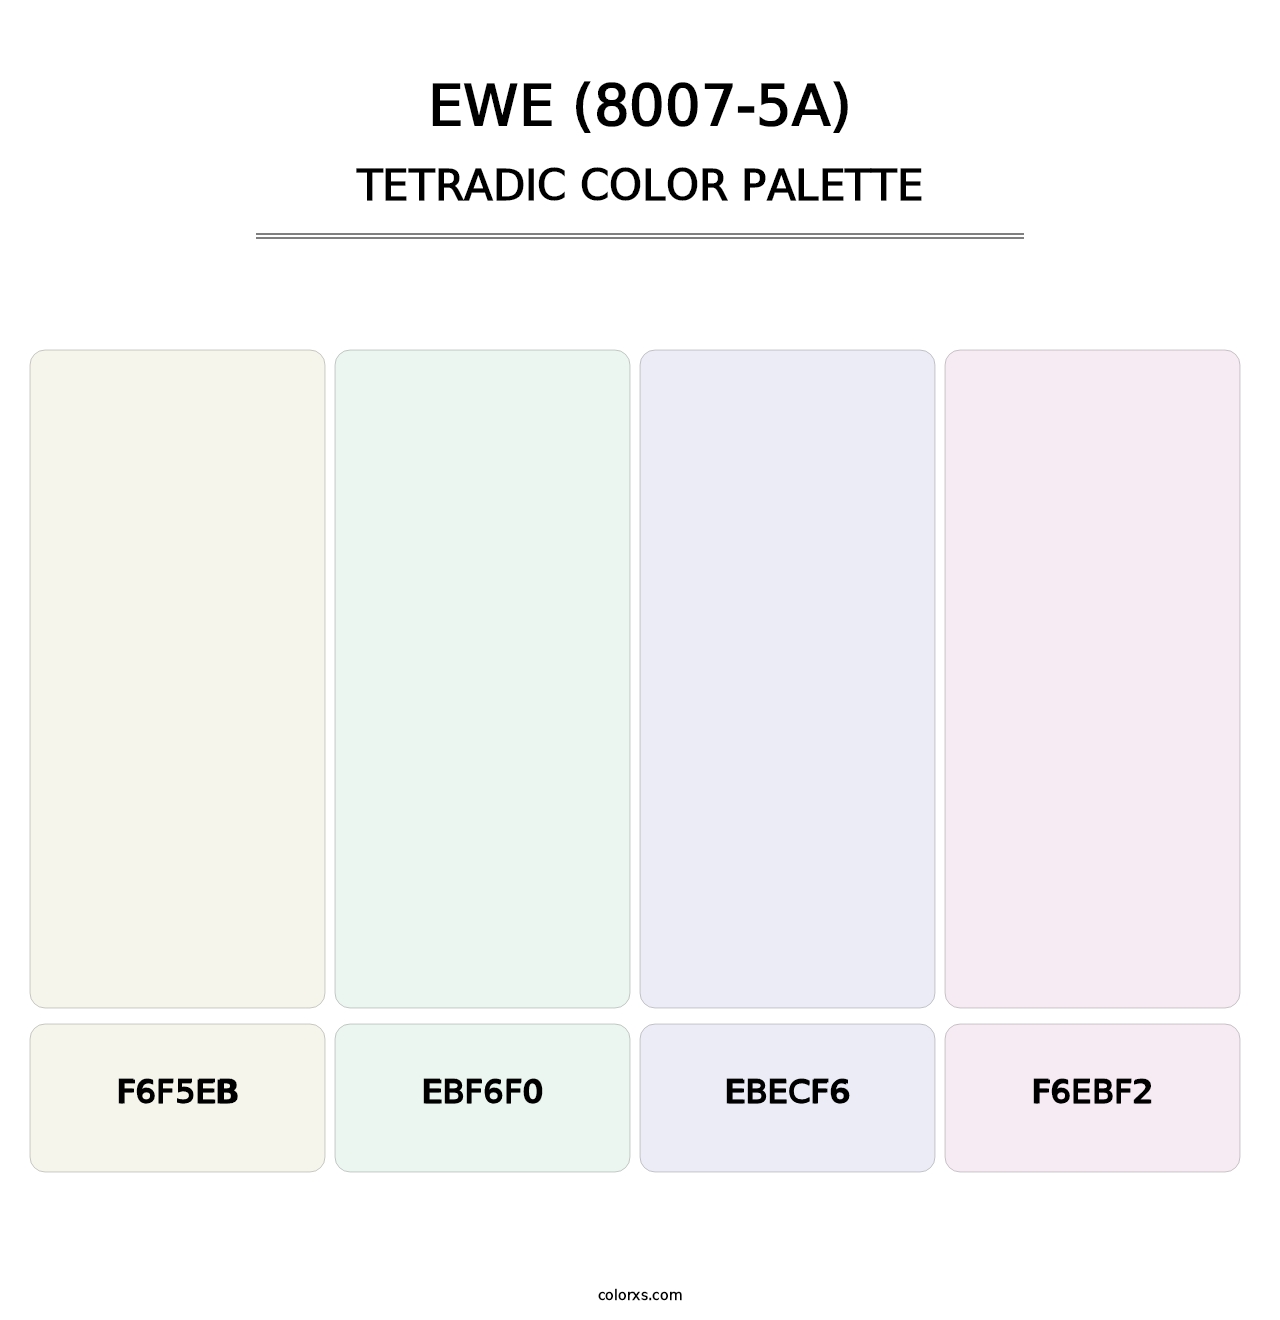 Ewe (8007-5A) - Tetradic Color Palette